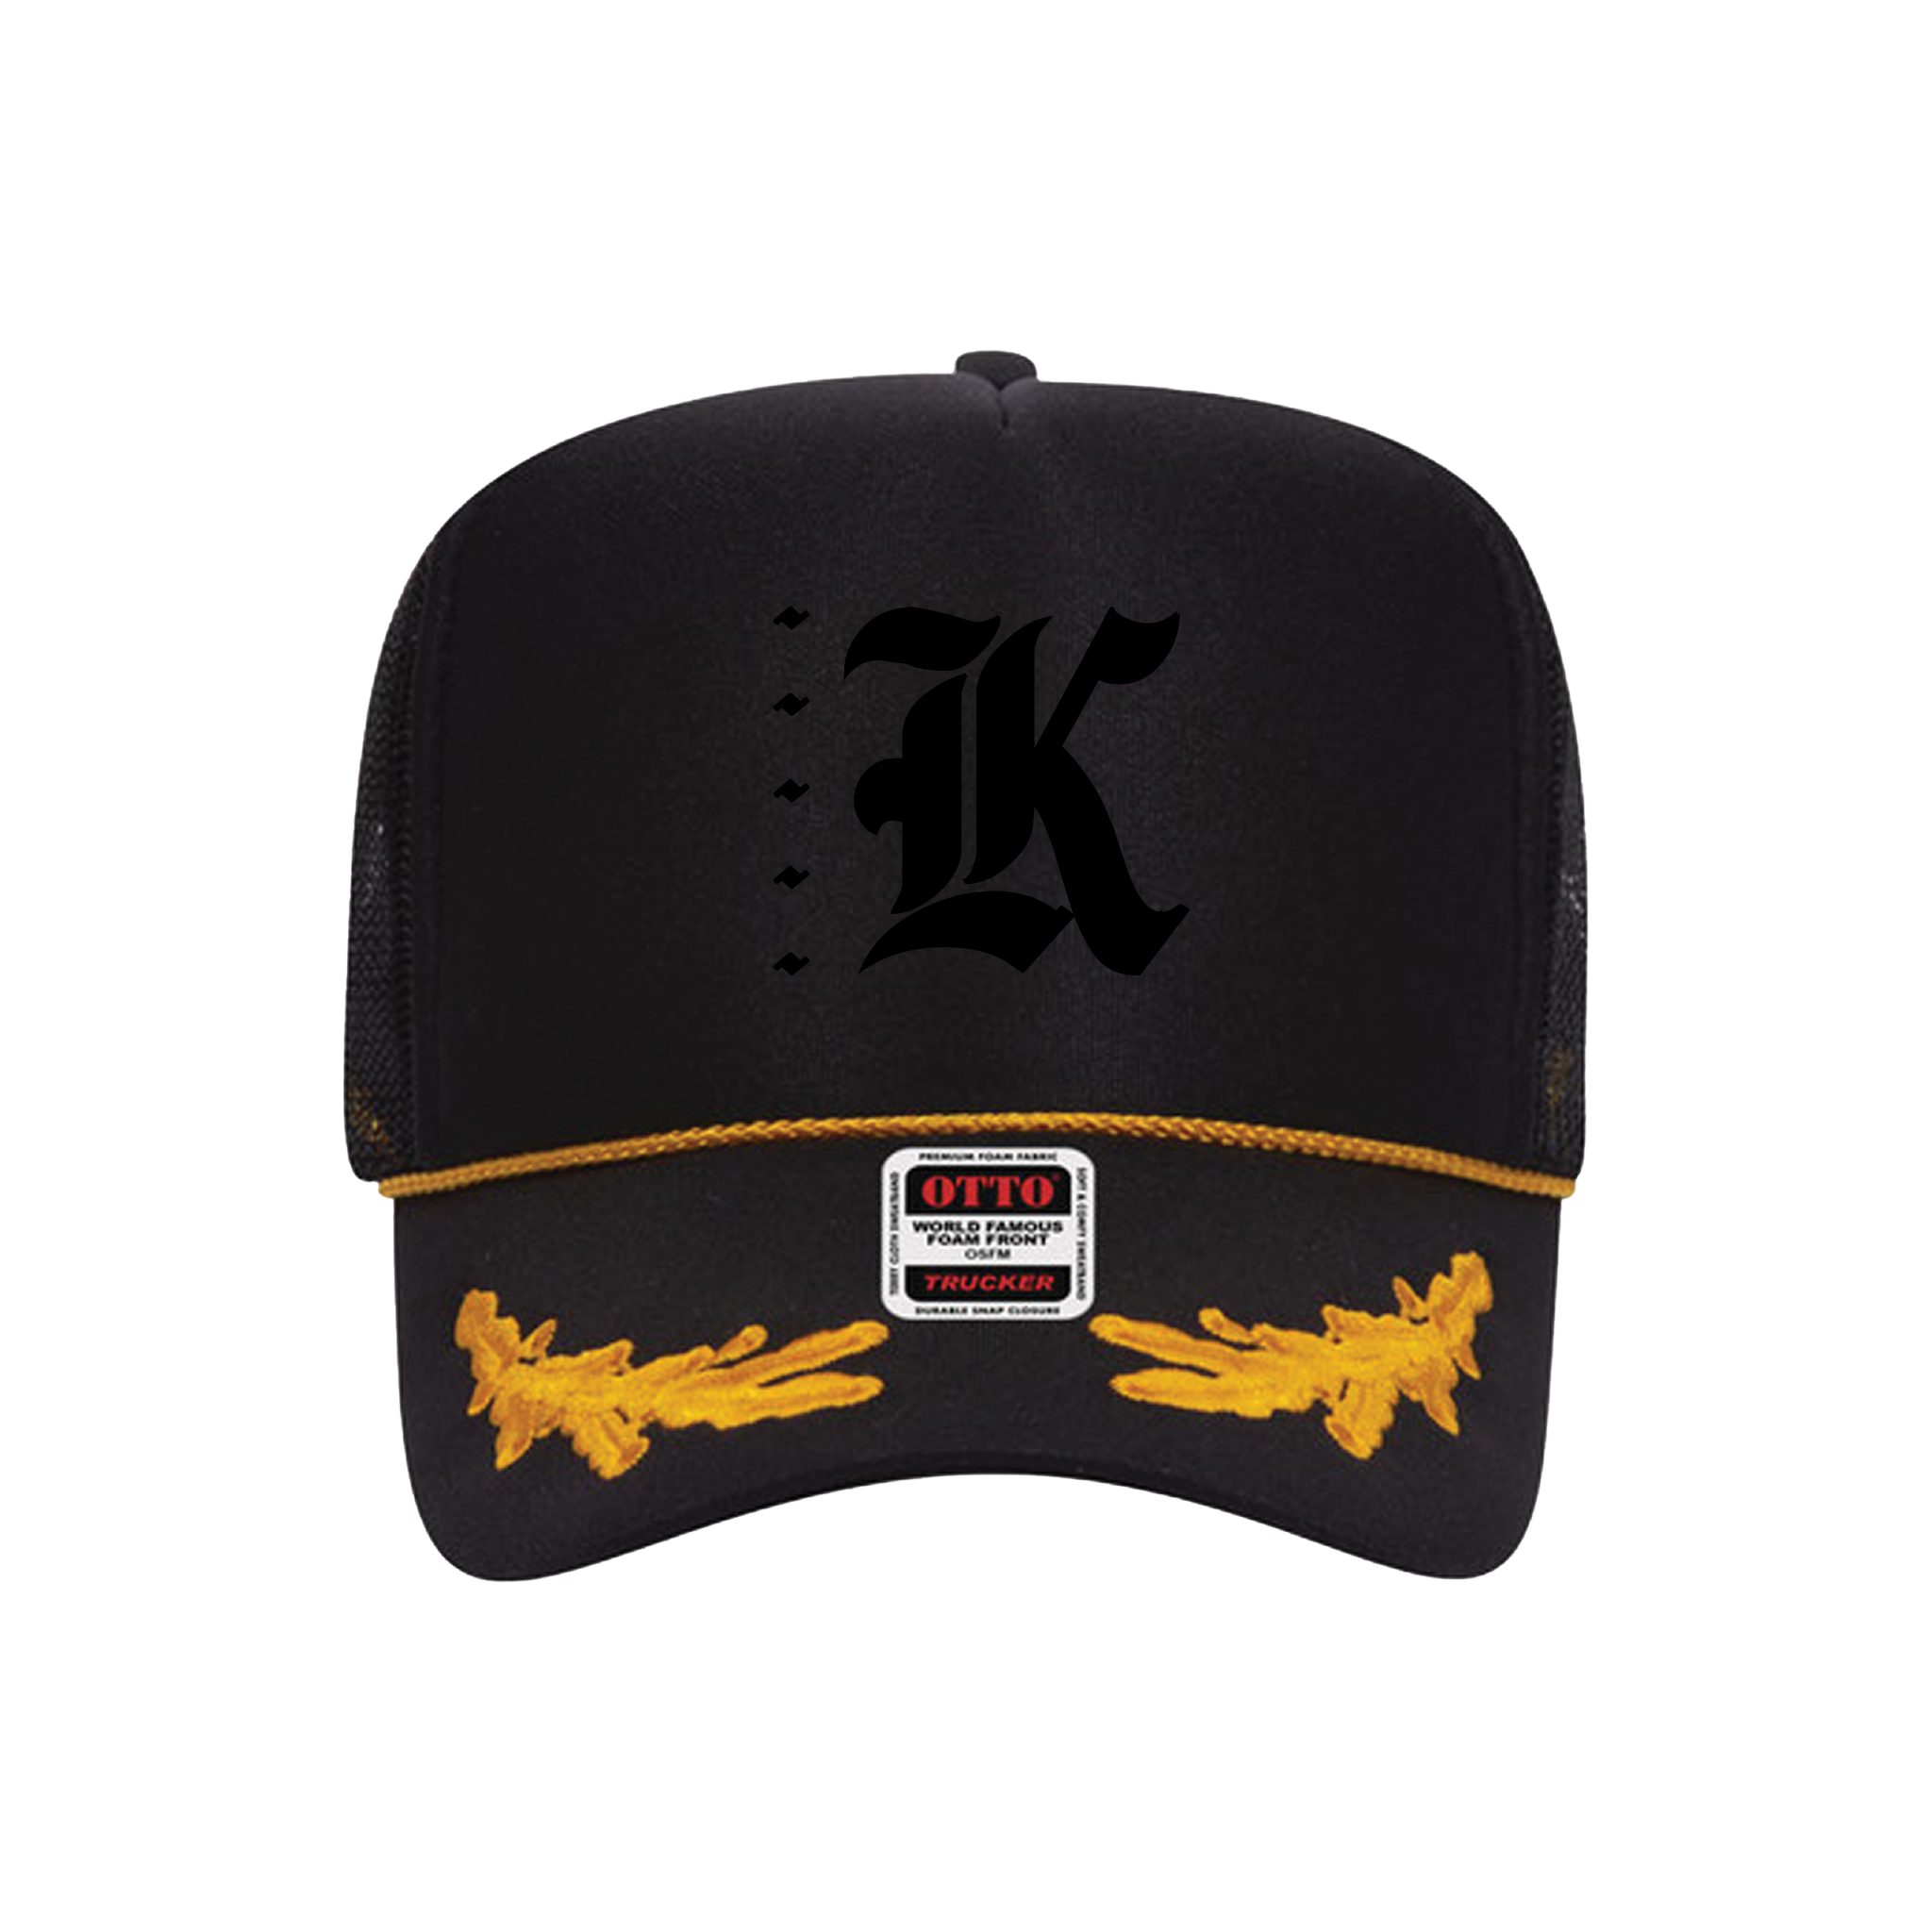 Black K Captain Hat